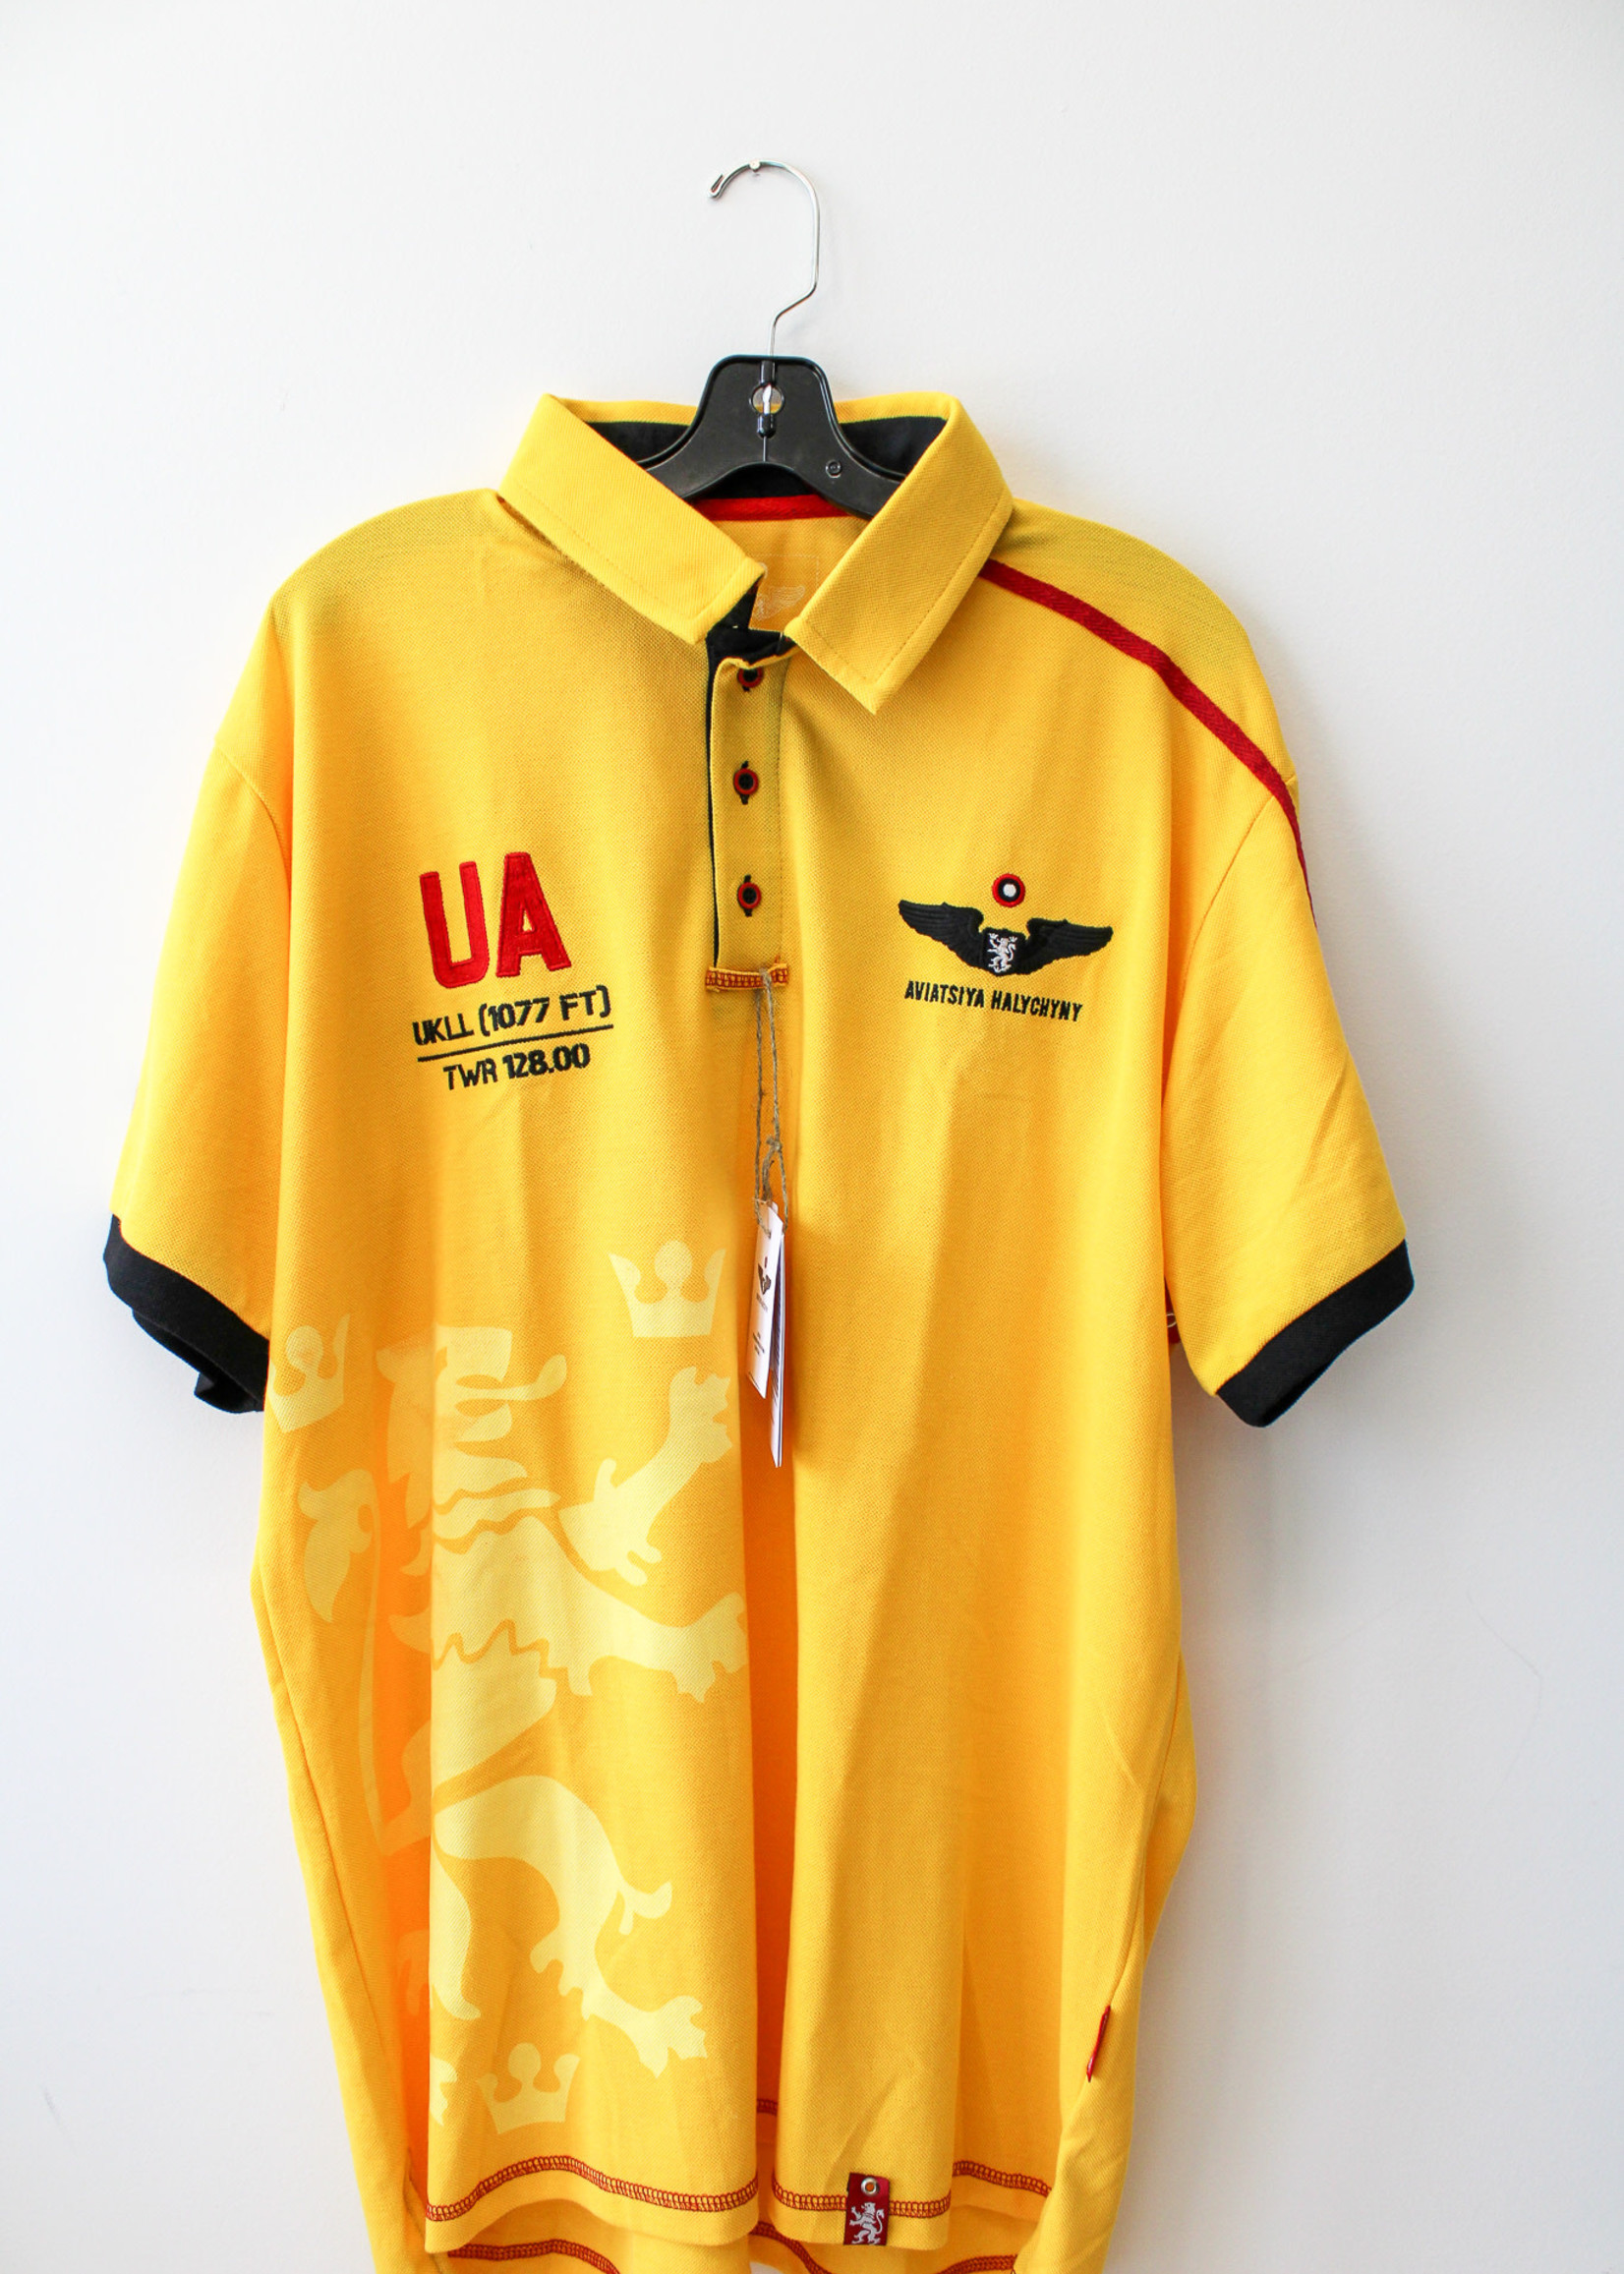 POLO - Yellow, "UA", Short Sleeve